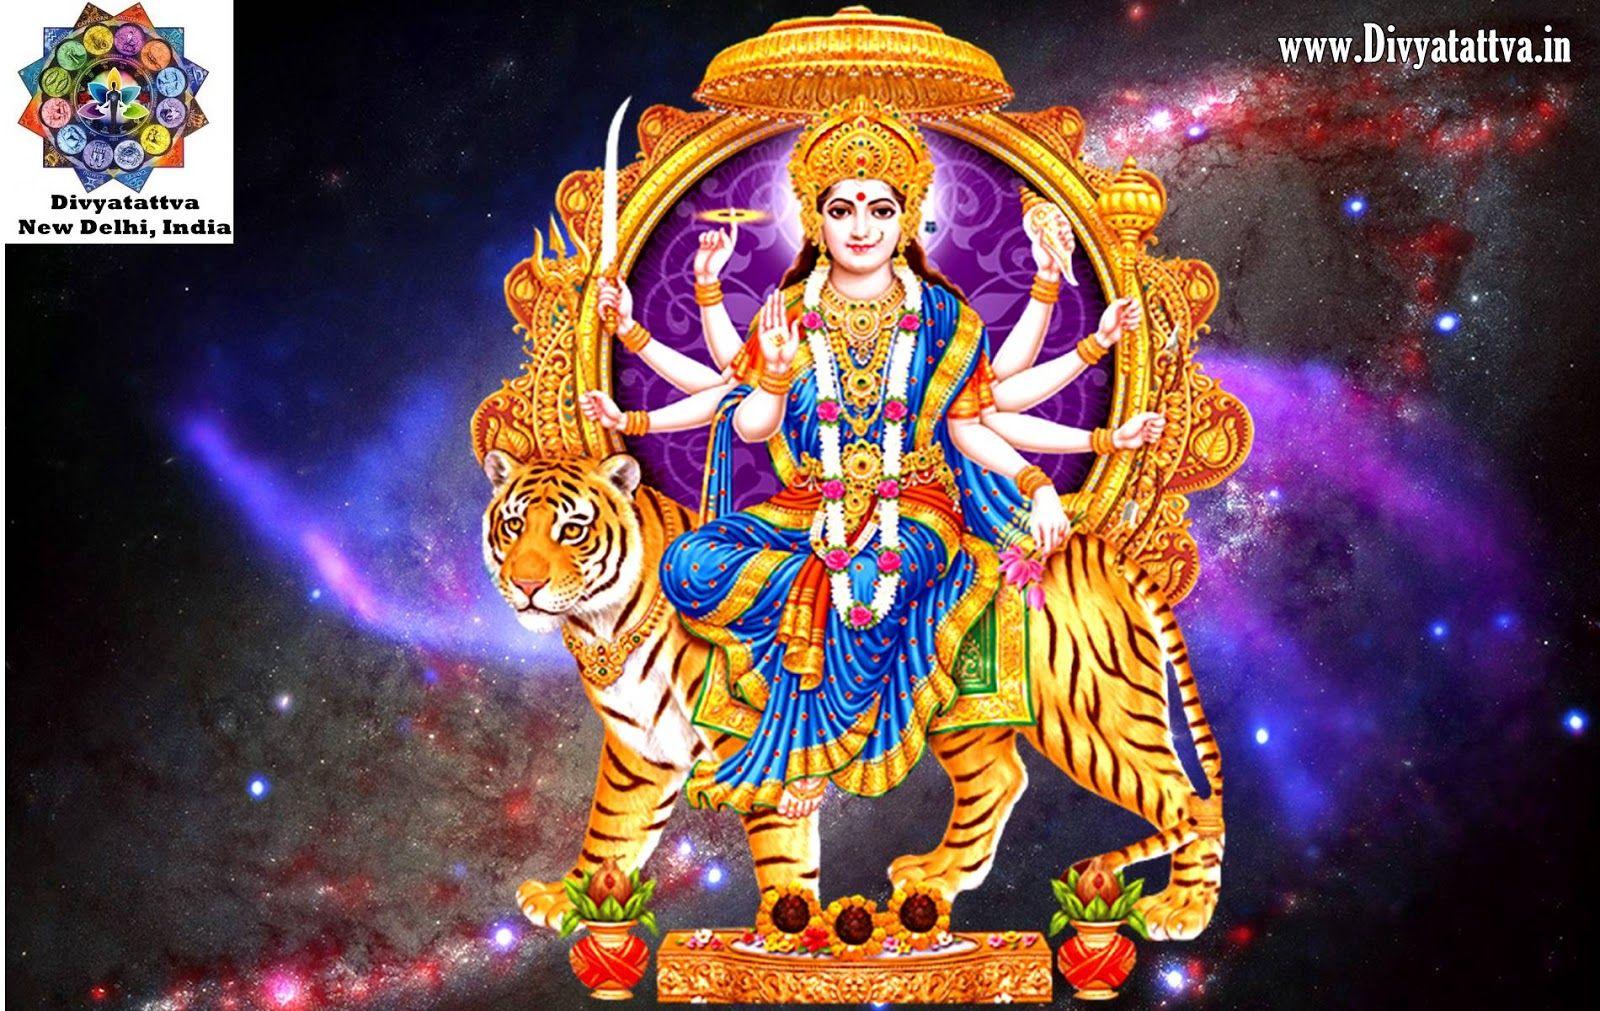 Divyatattva Astrology Free Horoscopes Psychic Tarot Yoga Tantra Occult Image Videos, Goddess Durga Image Full HD Wide Goddess Durga Wallpaper Maa Durga Devi Picture Maa Durga wallpaper HD Best image of